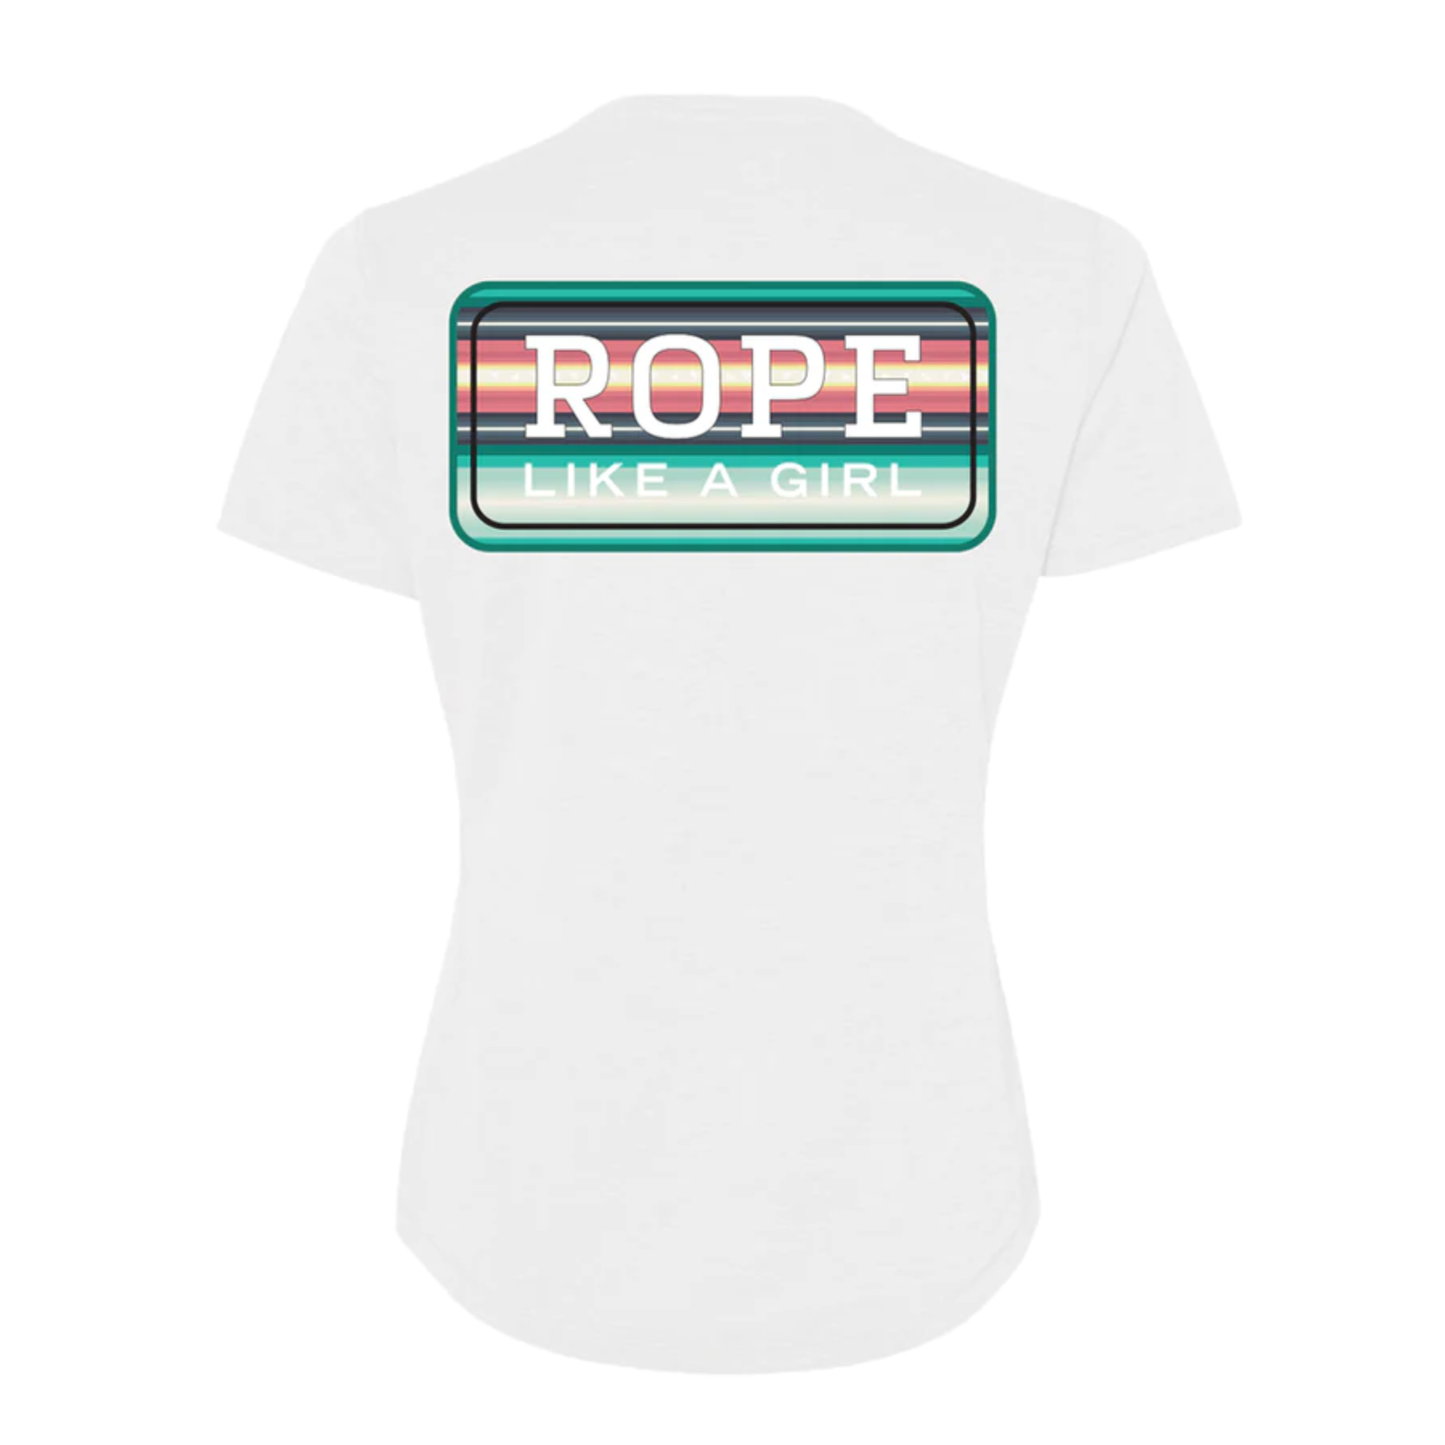 Hooey Ladies Bodega Graphic White T-Shirt HT1677WH